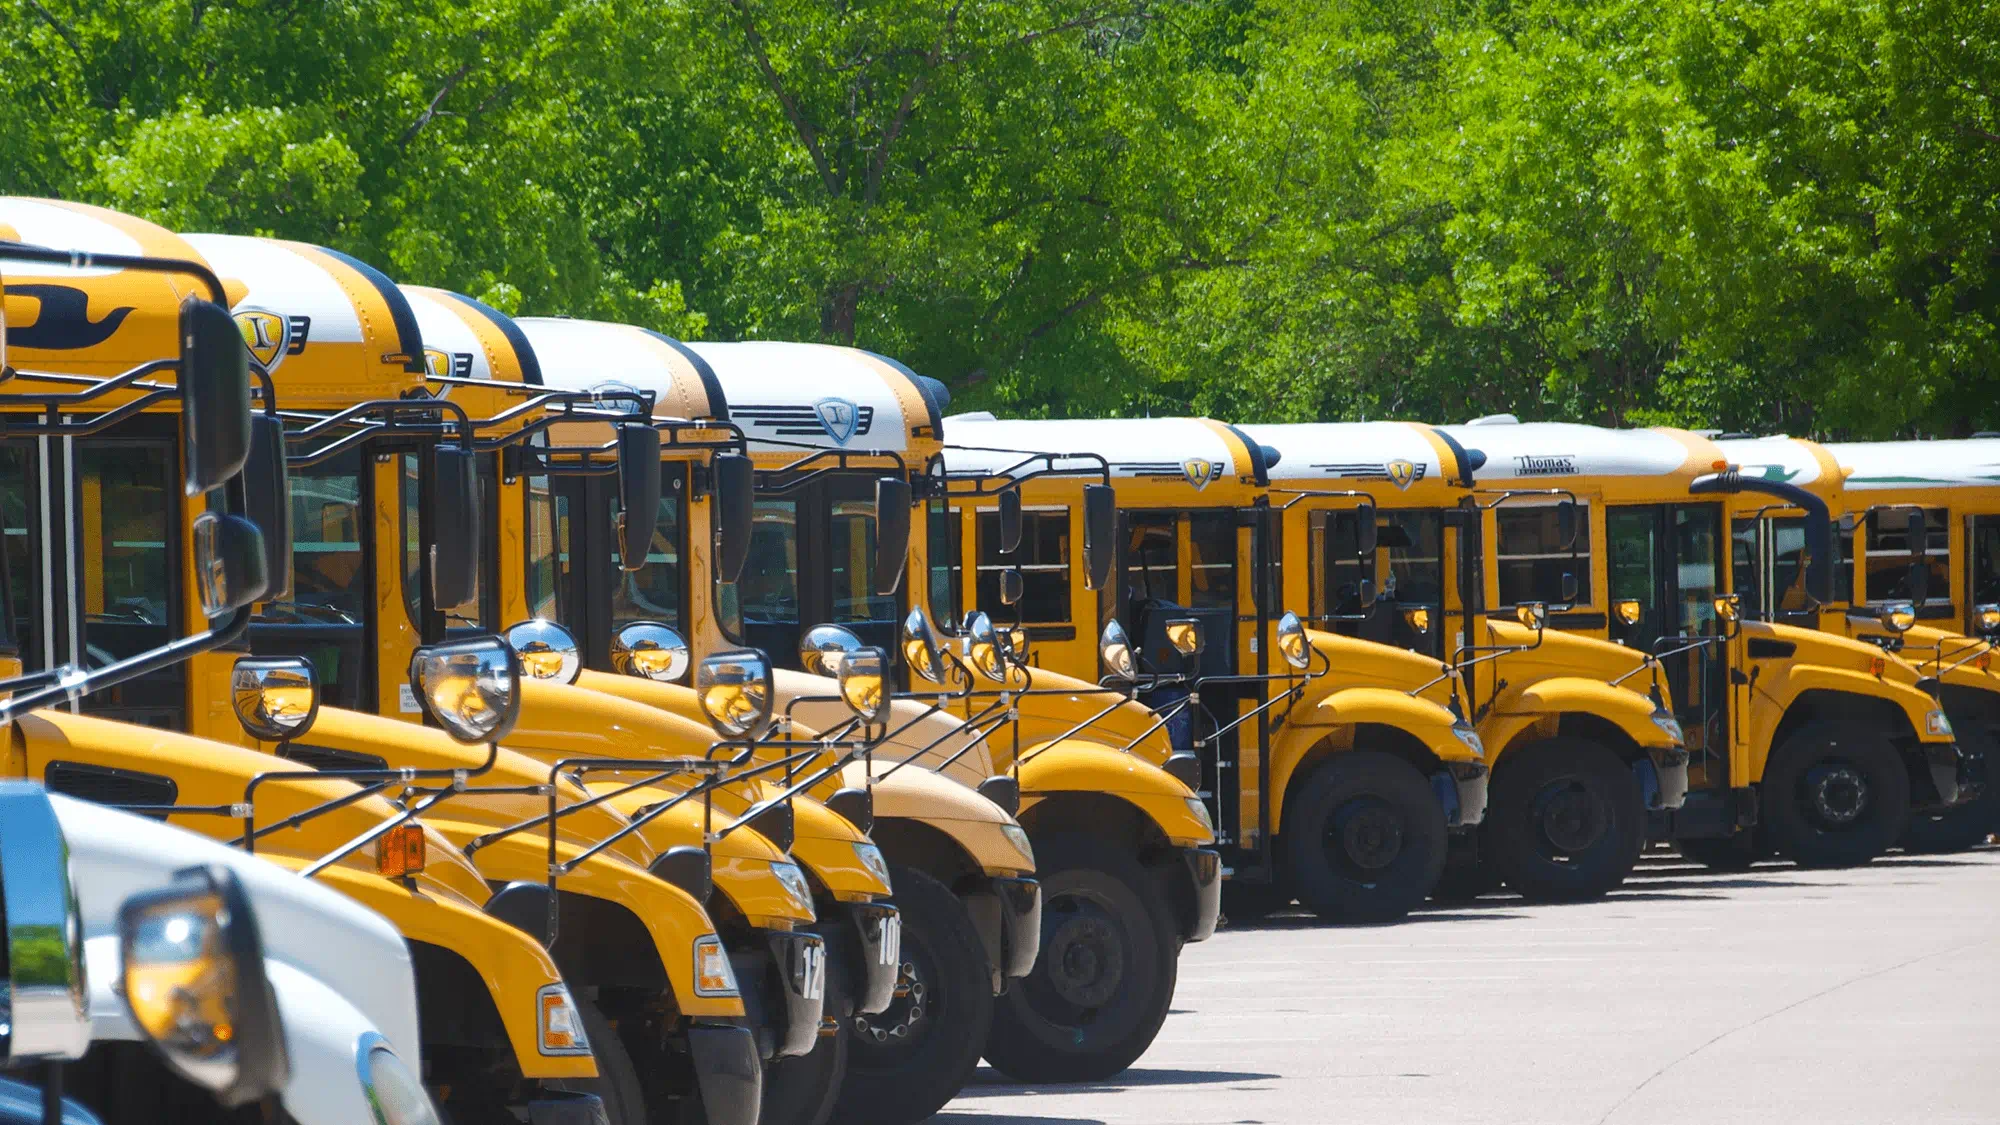 A daytime image of a school bus fleet